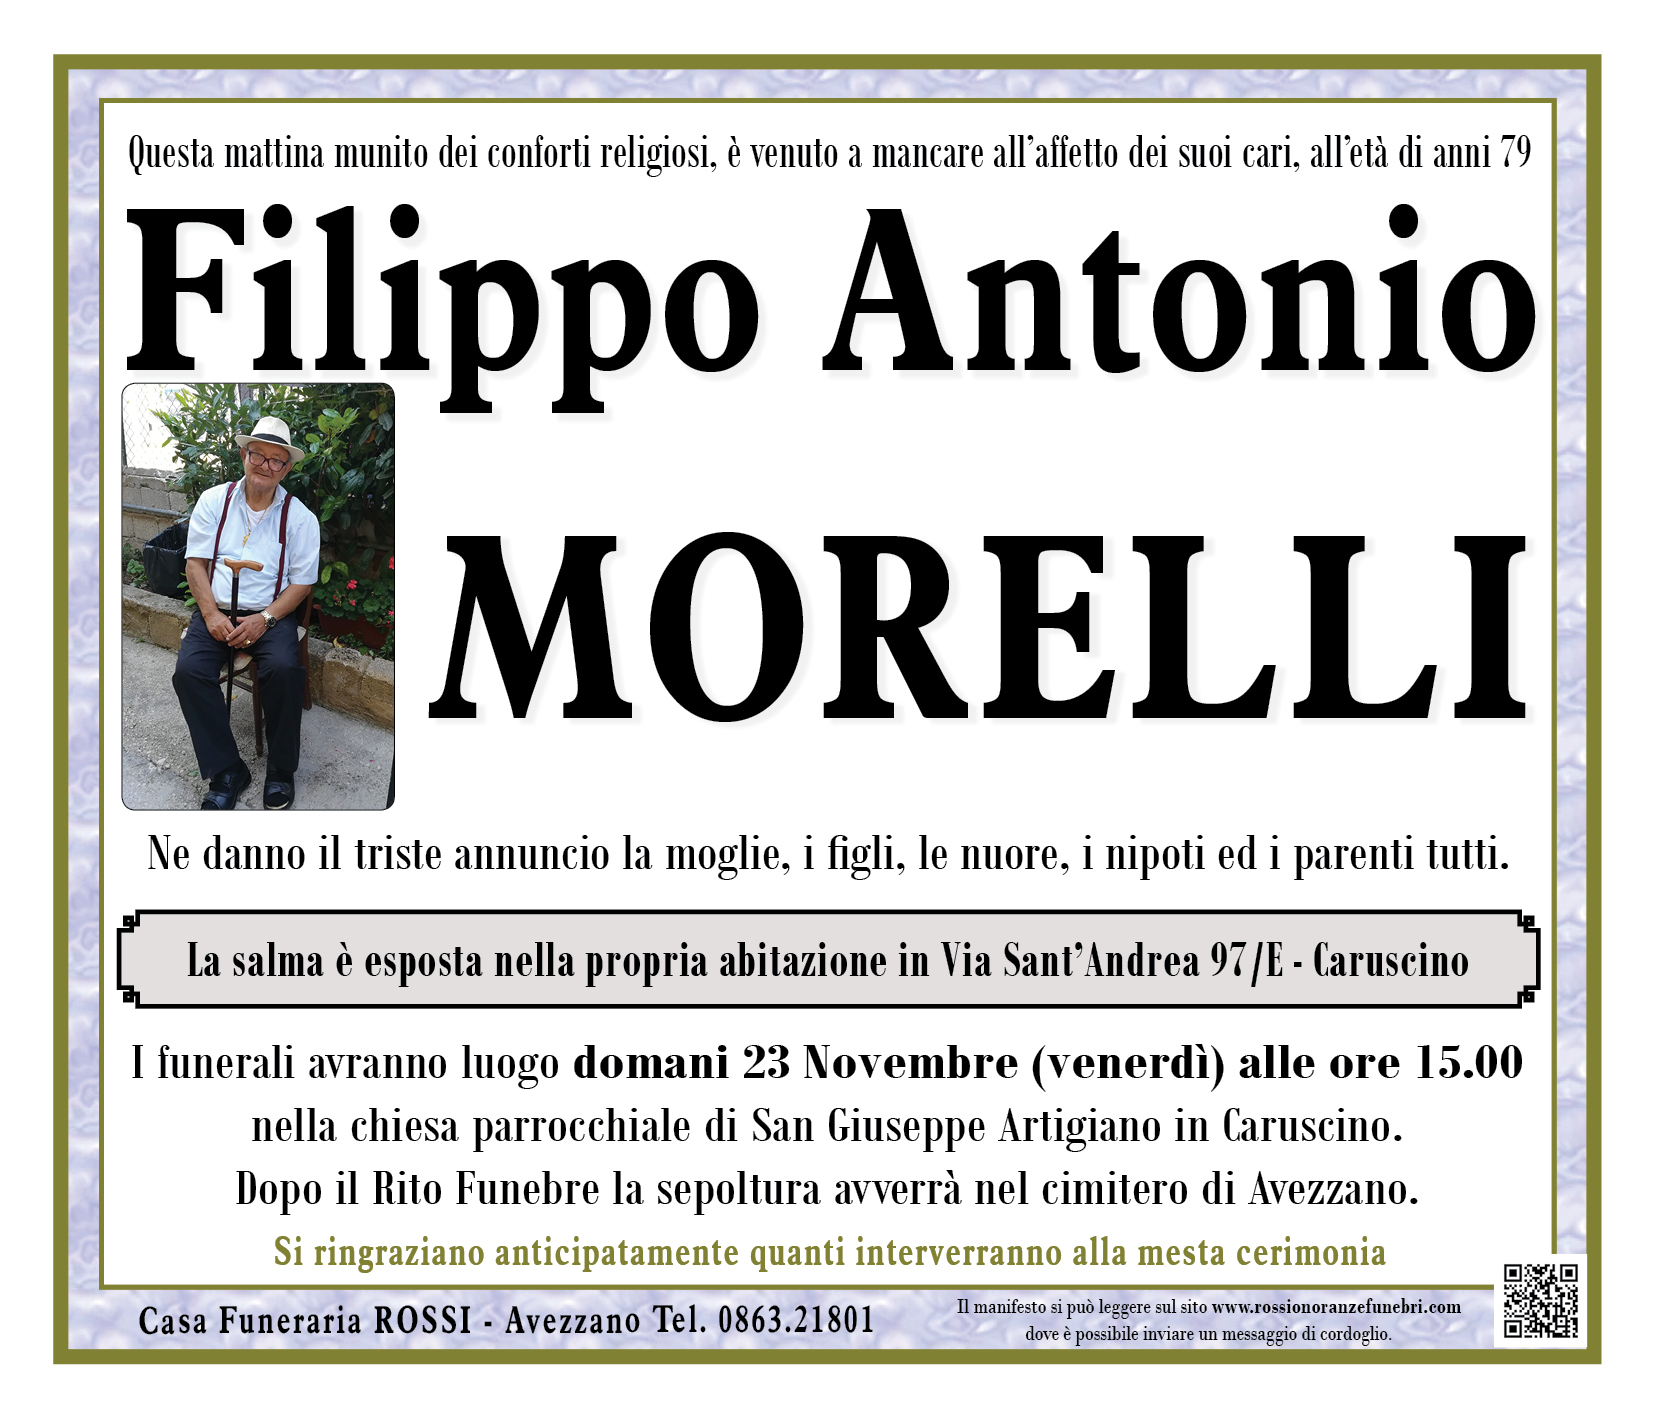 Filippo Antonio Morelli